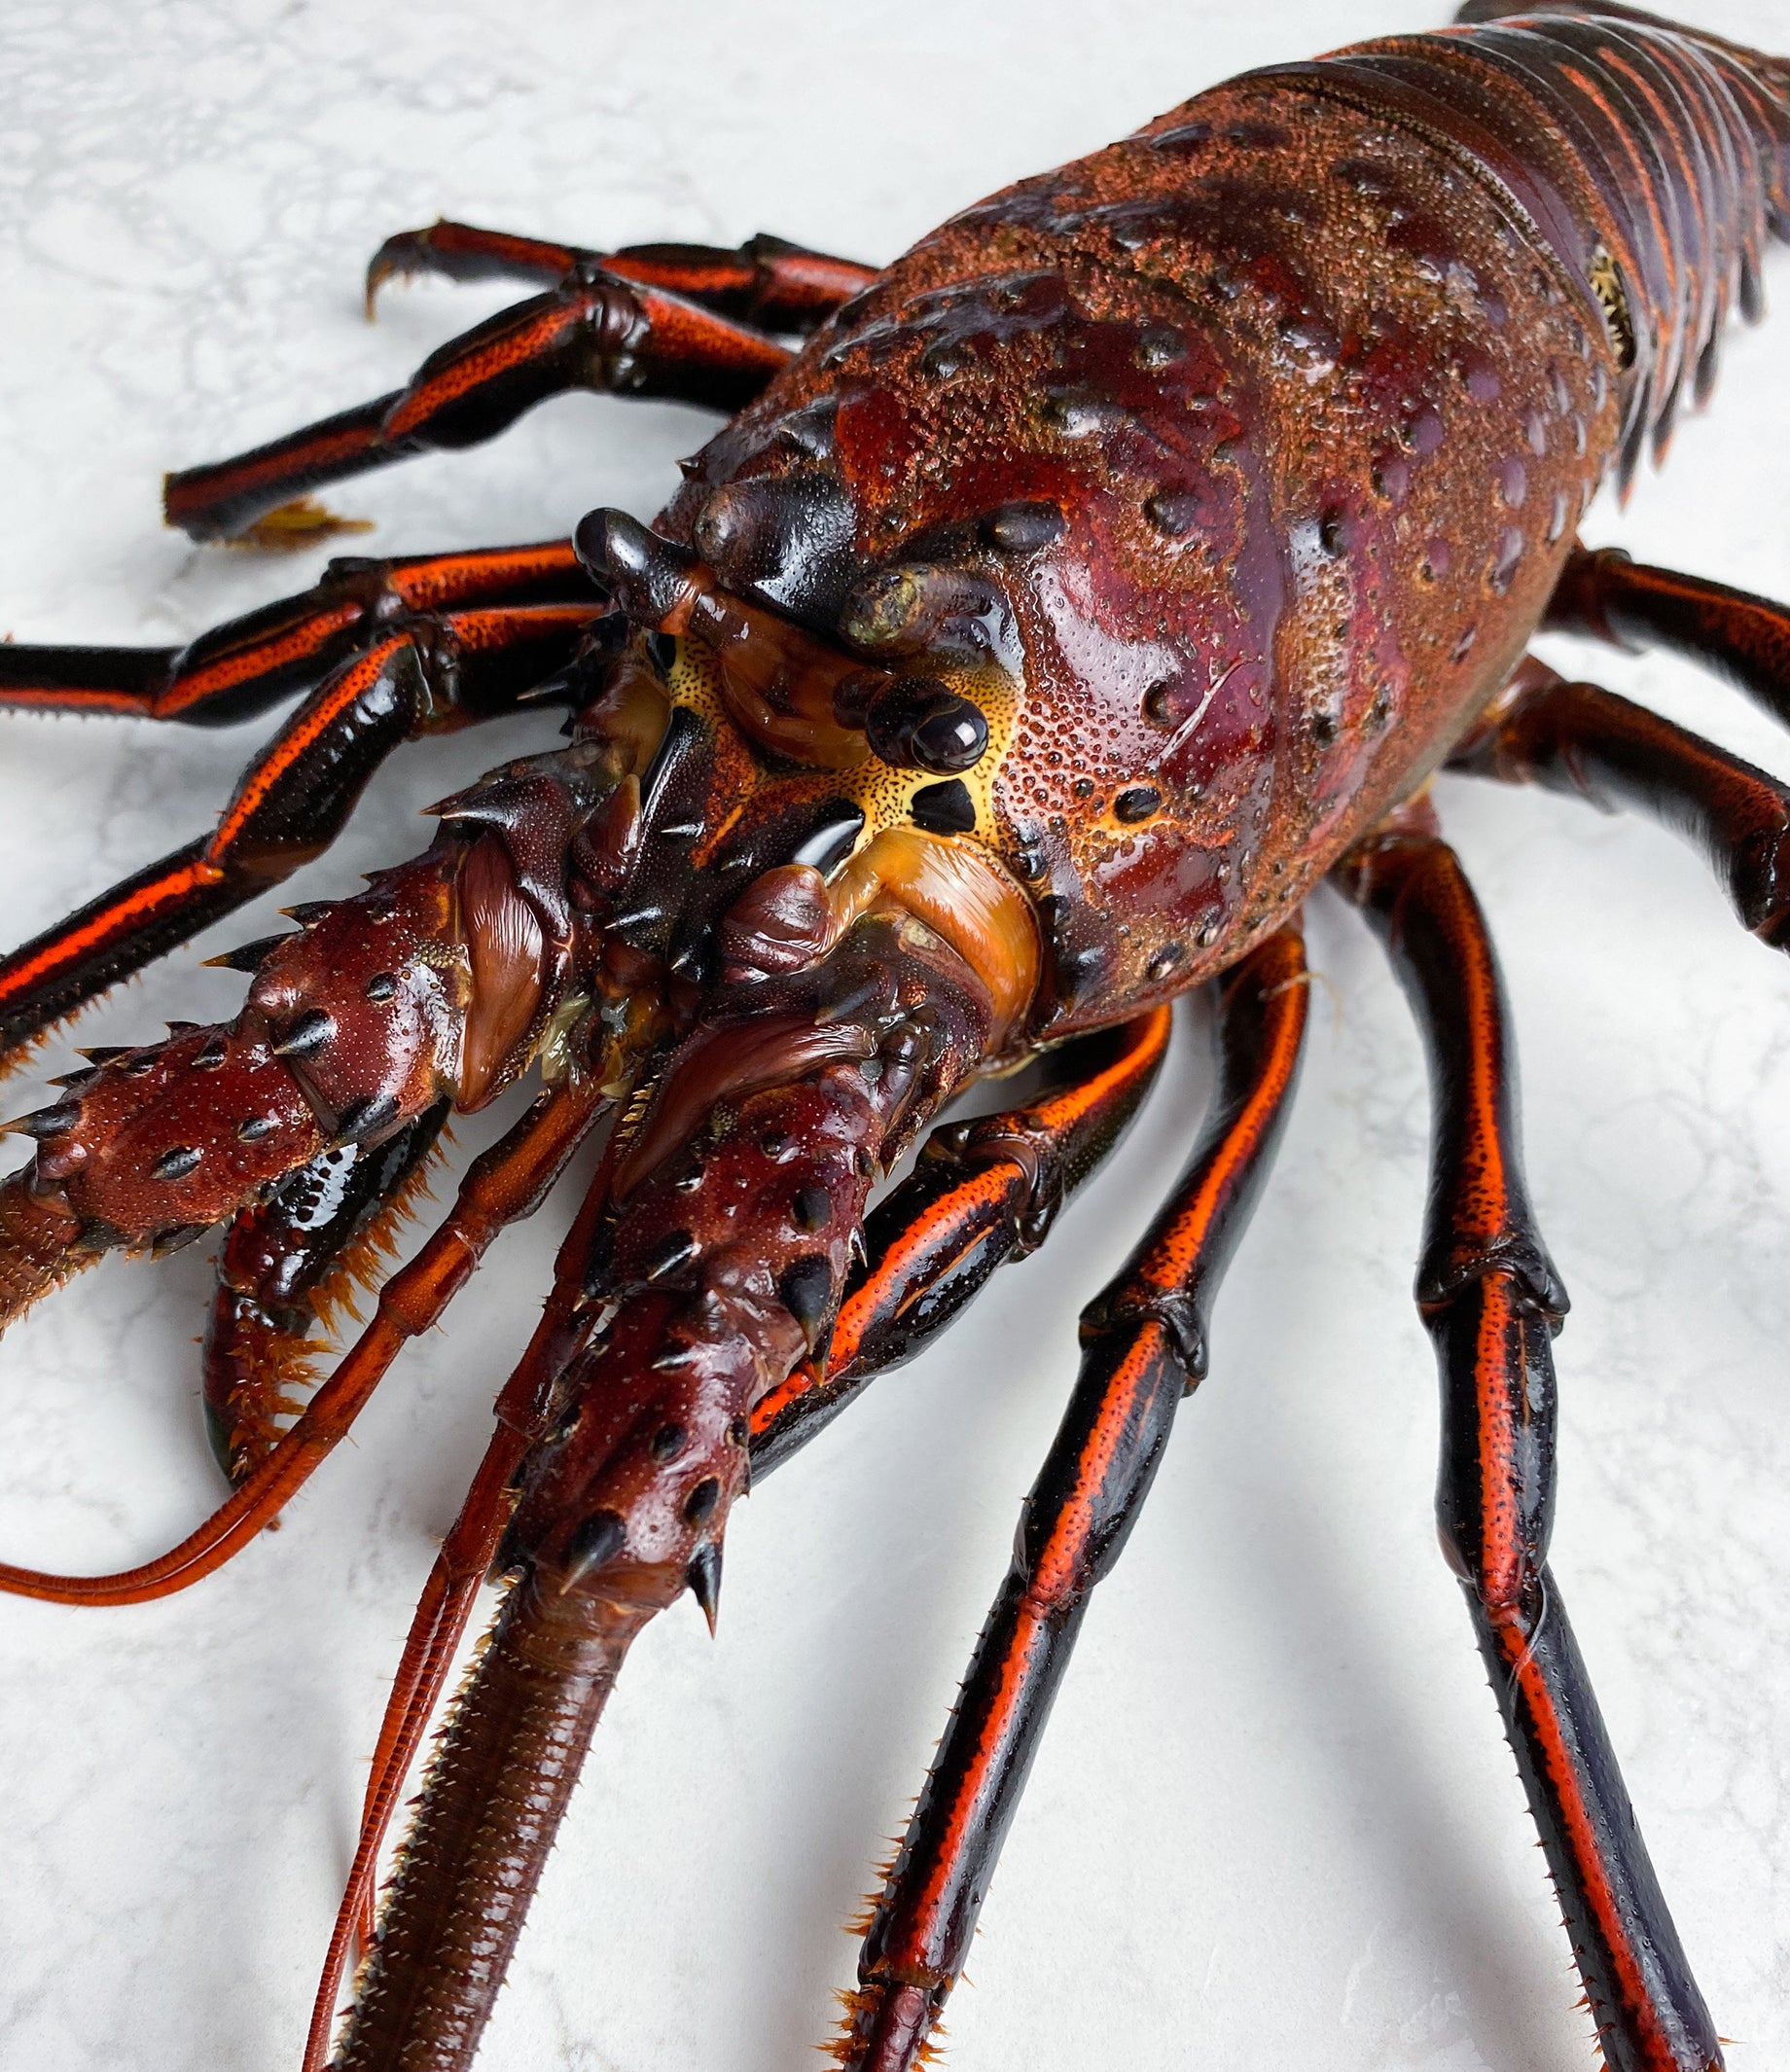 3 lb Live Maine Lobster